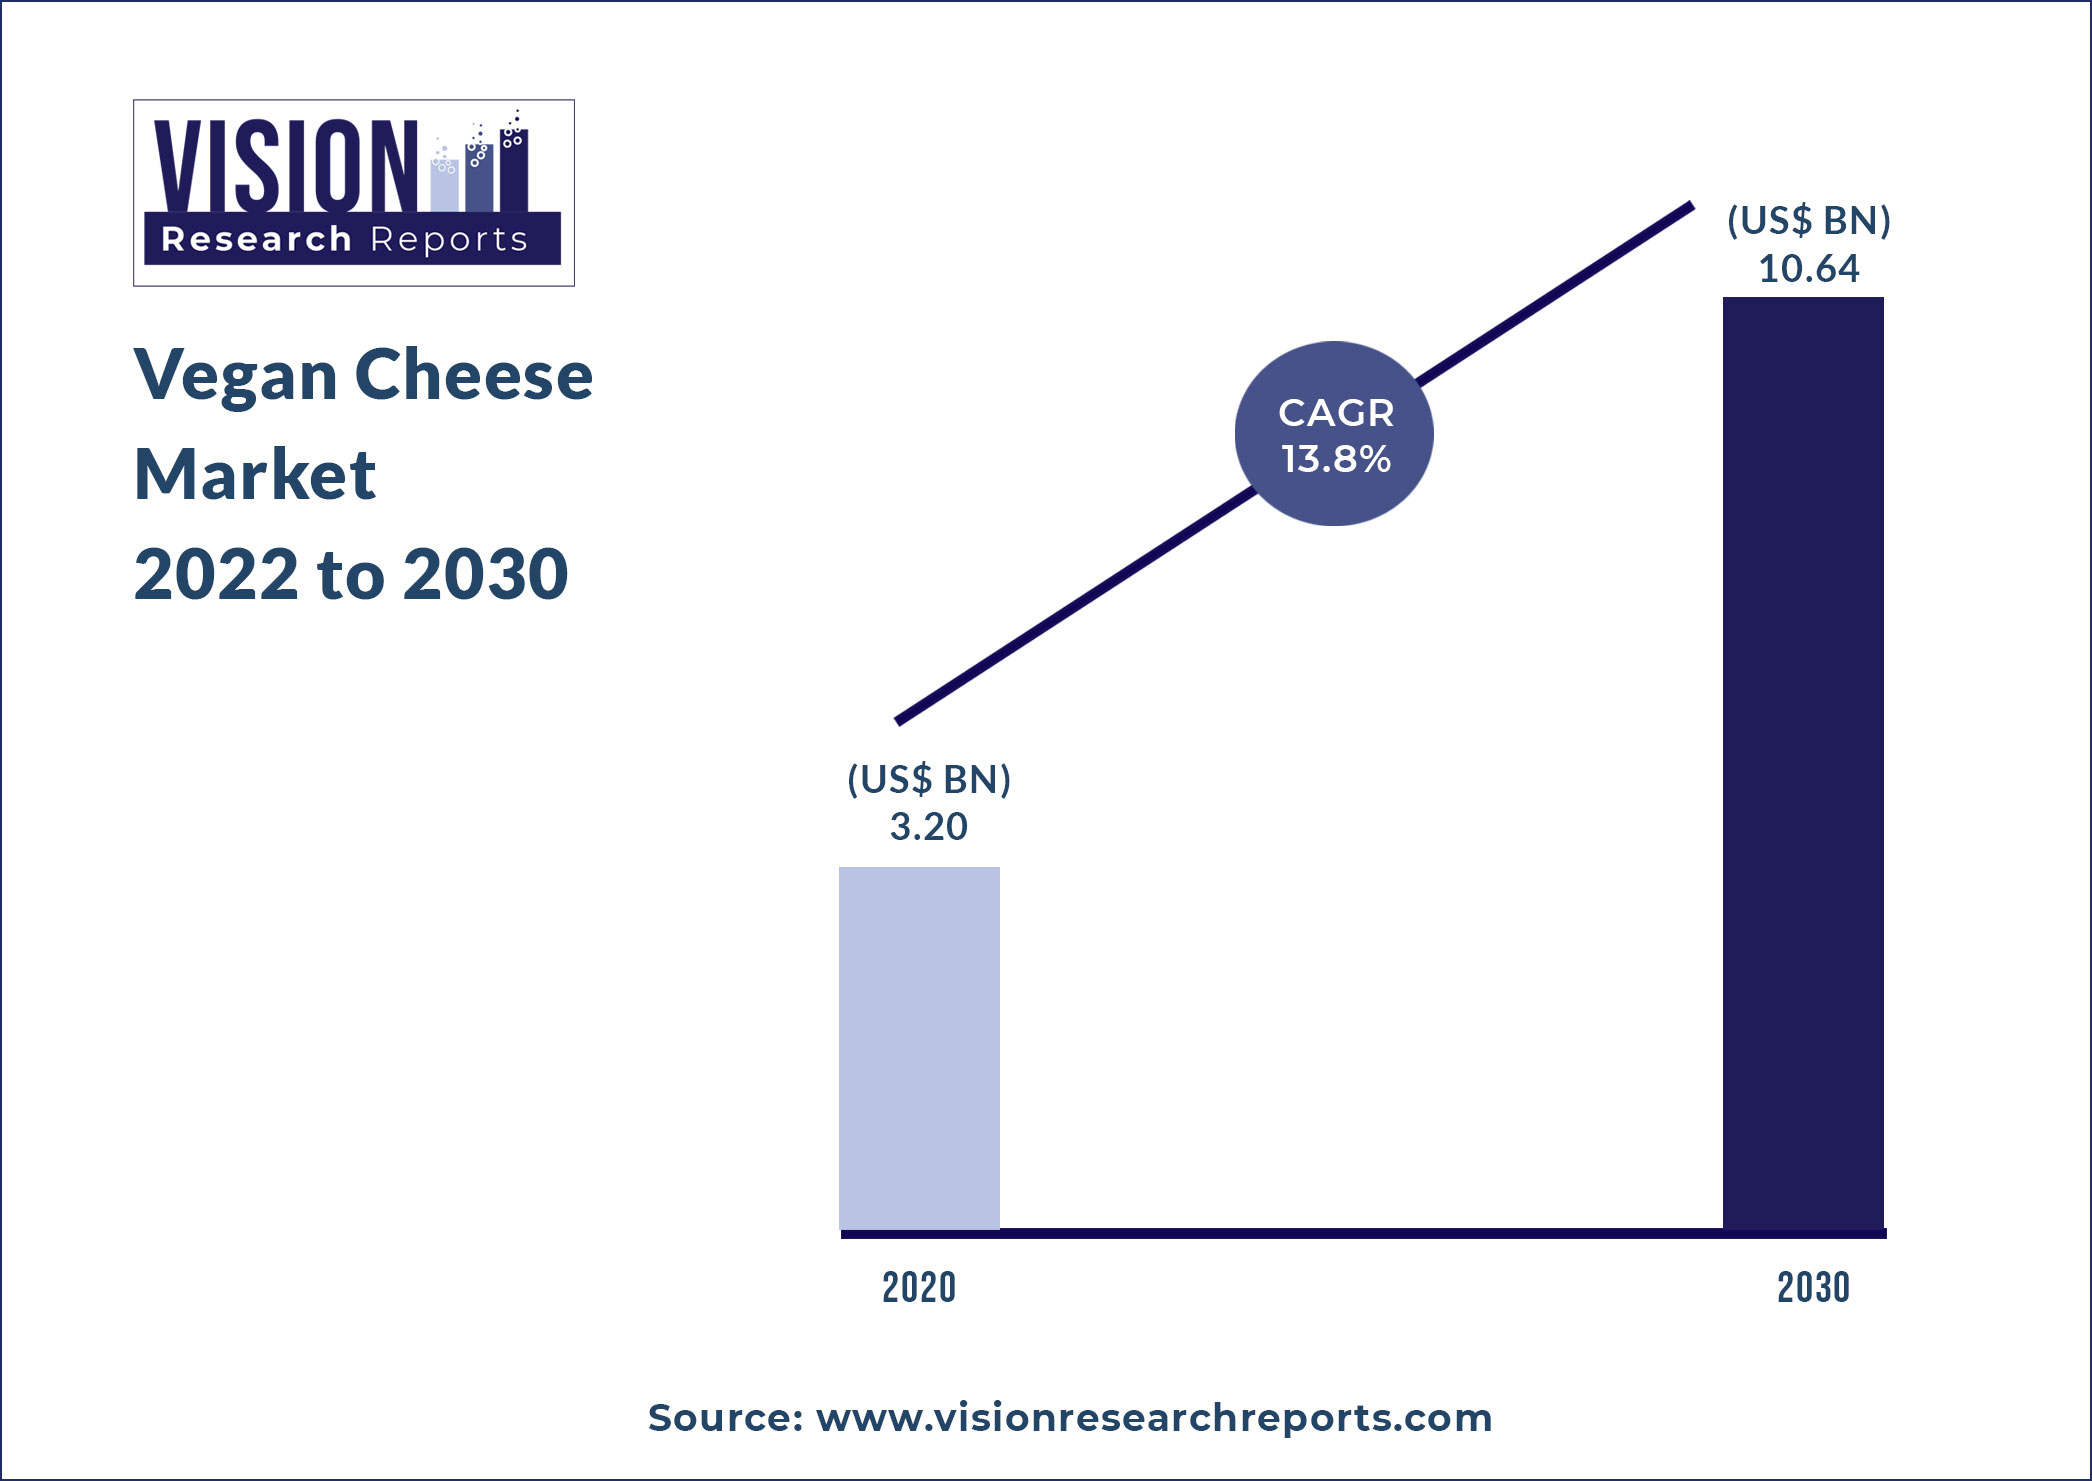 Vegan Cheese Market Size 2022 to 2030